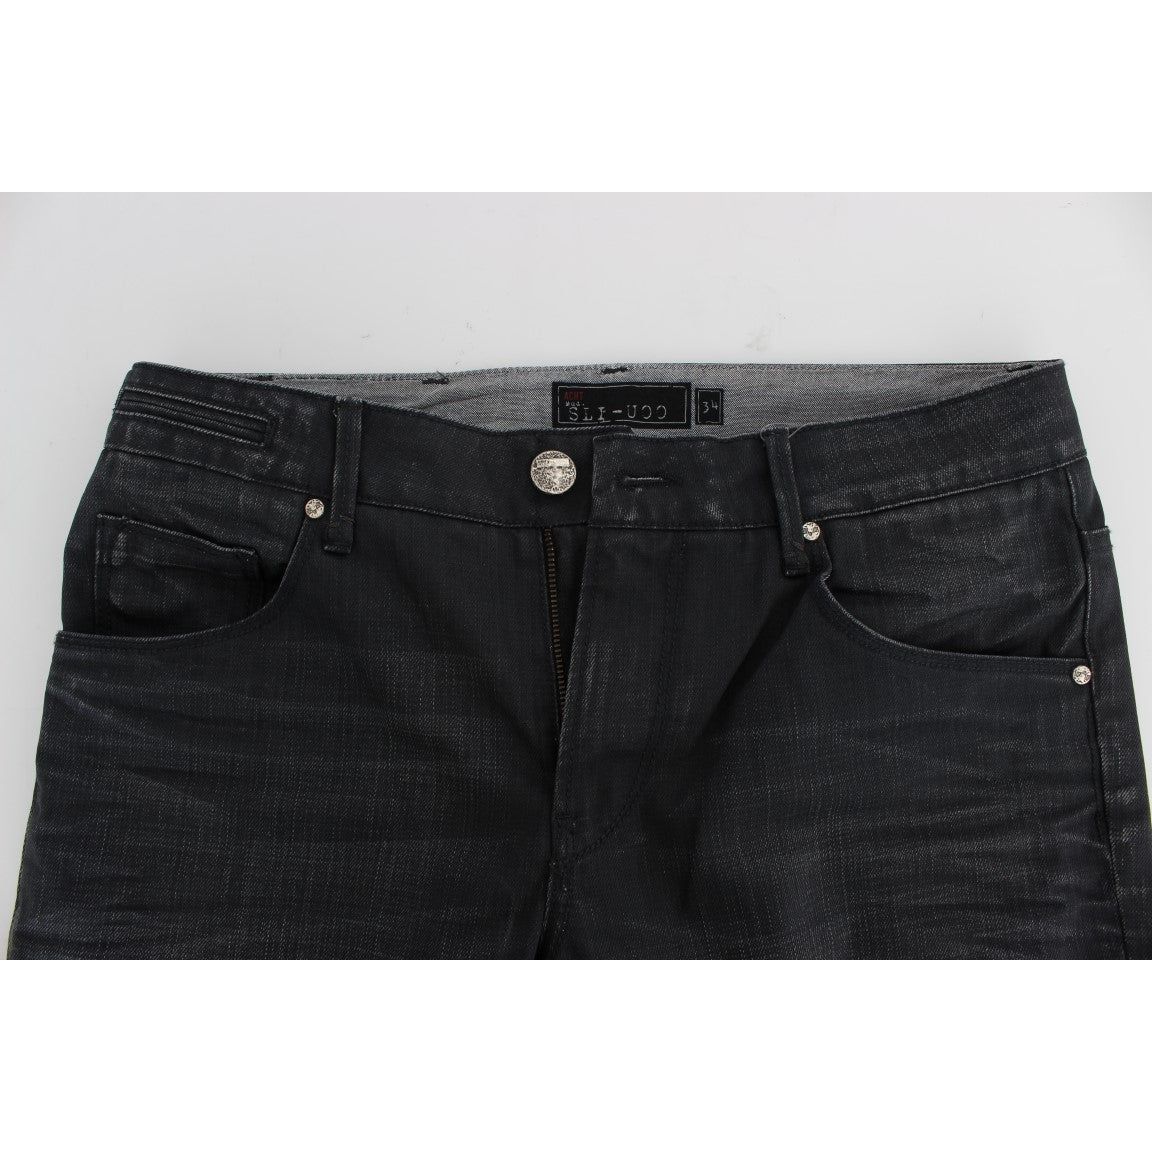 Acht Sleek Gray Slim Fit Italian Mens Jeans gray-cotton-skinny-slim-fit-jeans 298809-gray-cotton-skinny-slim-fit-jeans-4.jpg